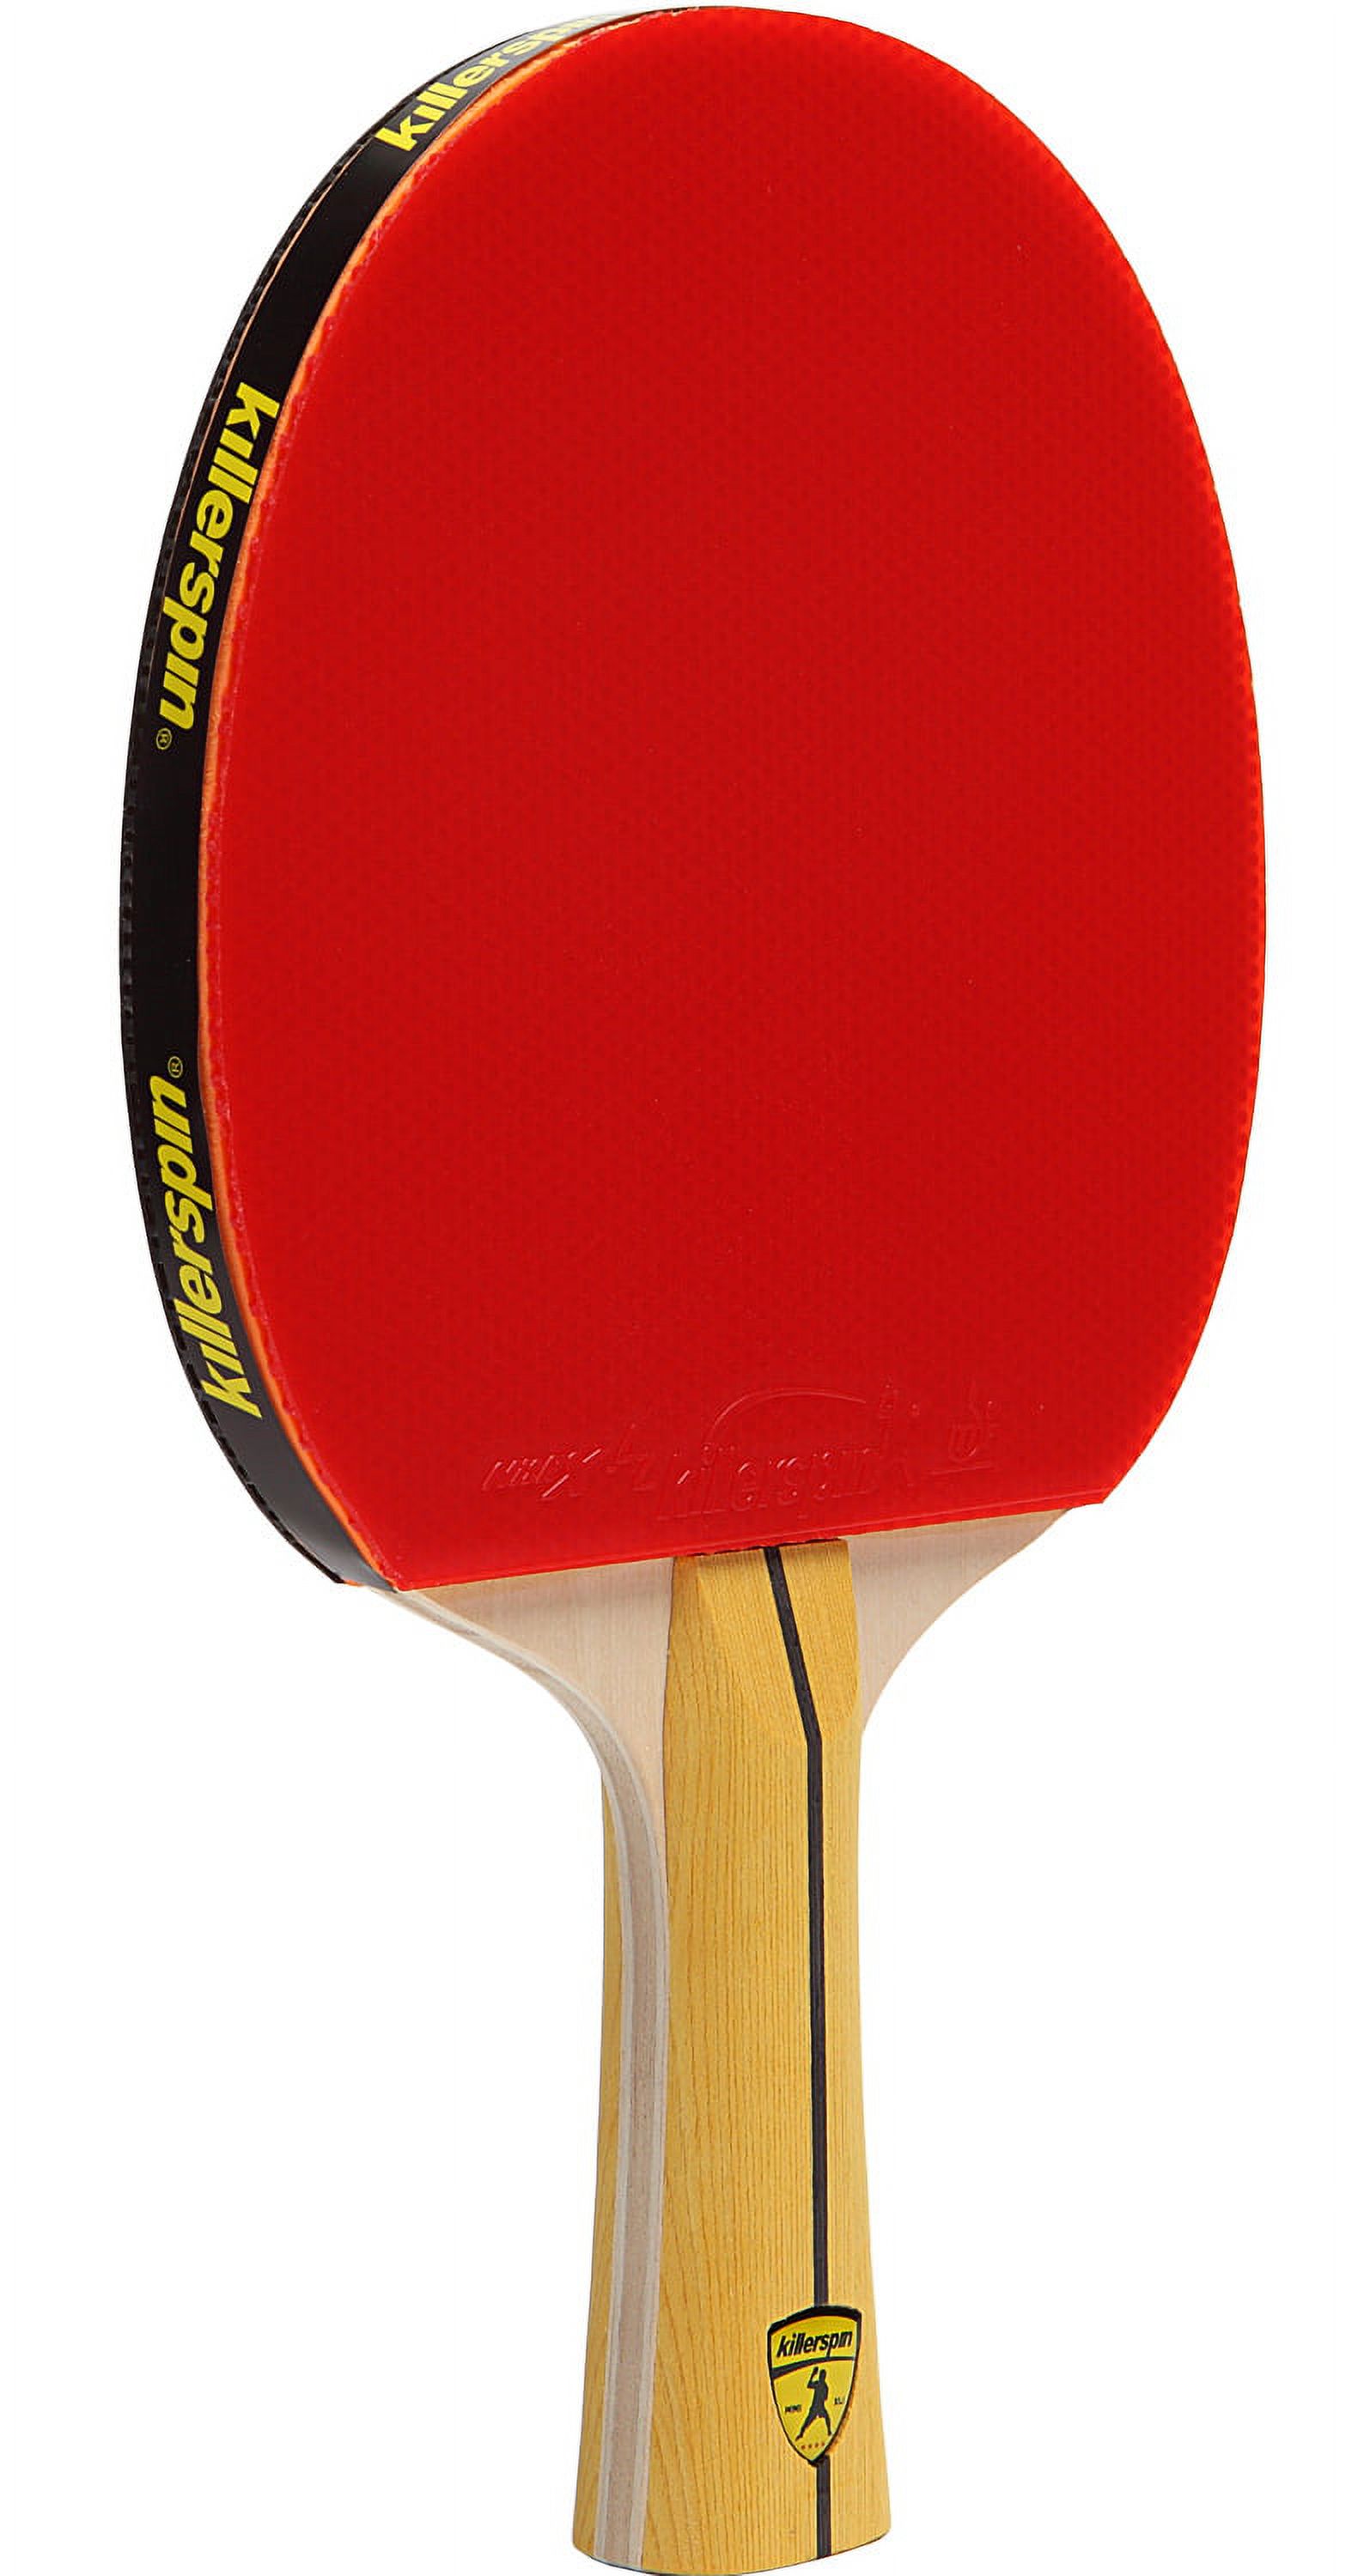 Killerspin JET400 Table Tennis Paddle, Ping Pong Racket - image 2 of 8